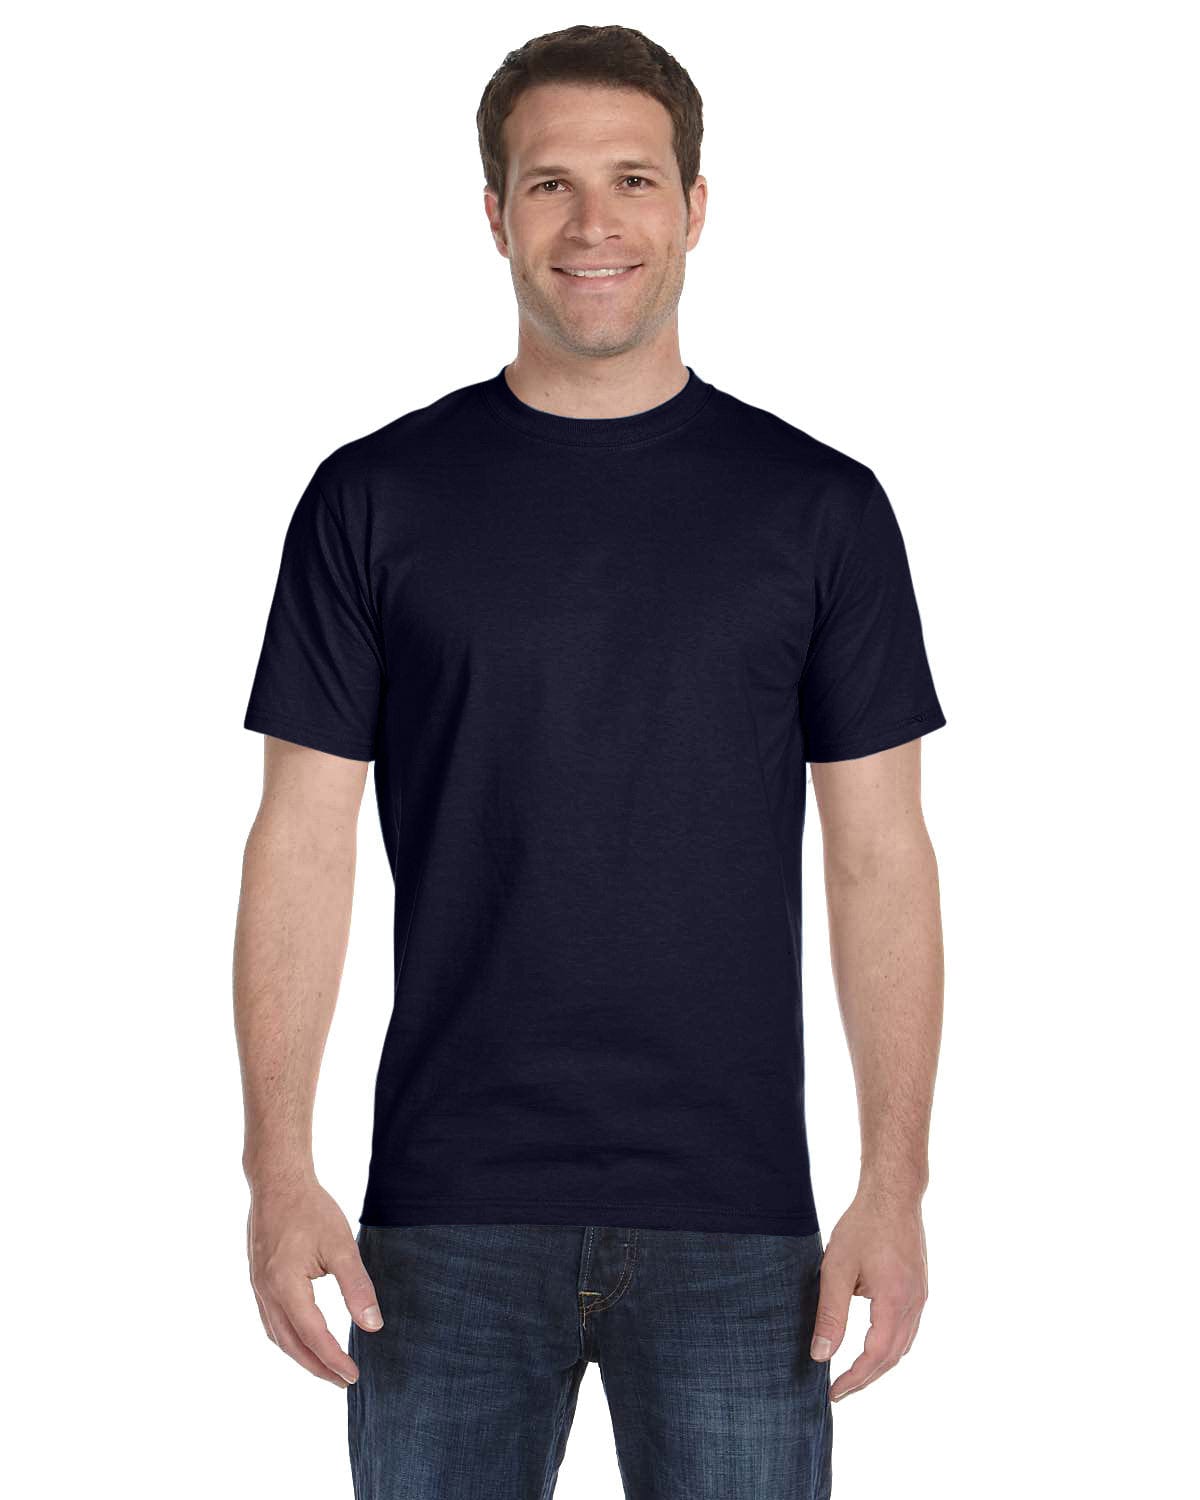 Hanes Comfortsoft 50/50 Cotton/Poly T-Shirt